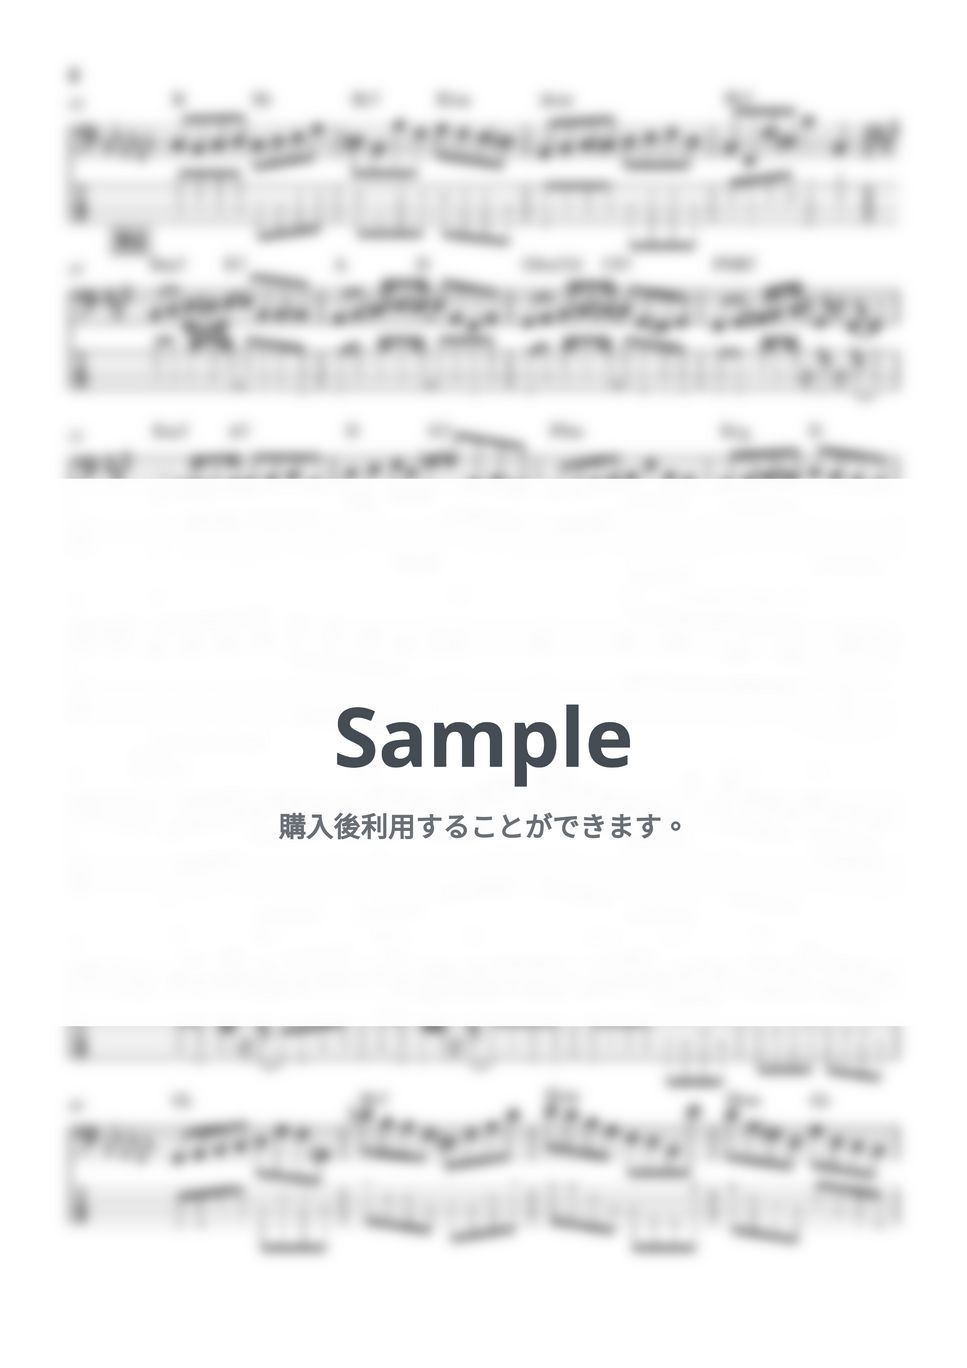 Official髭男dism - ミックスナッツ (アニメ『SPY×FAMILY』オープニングテーマ、ベース譜) by Kodai Hojo